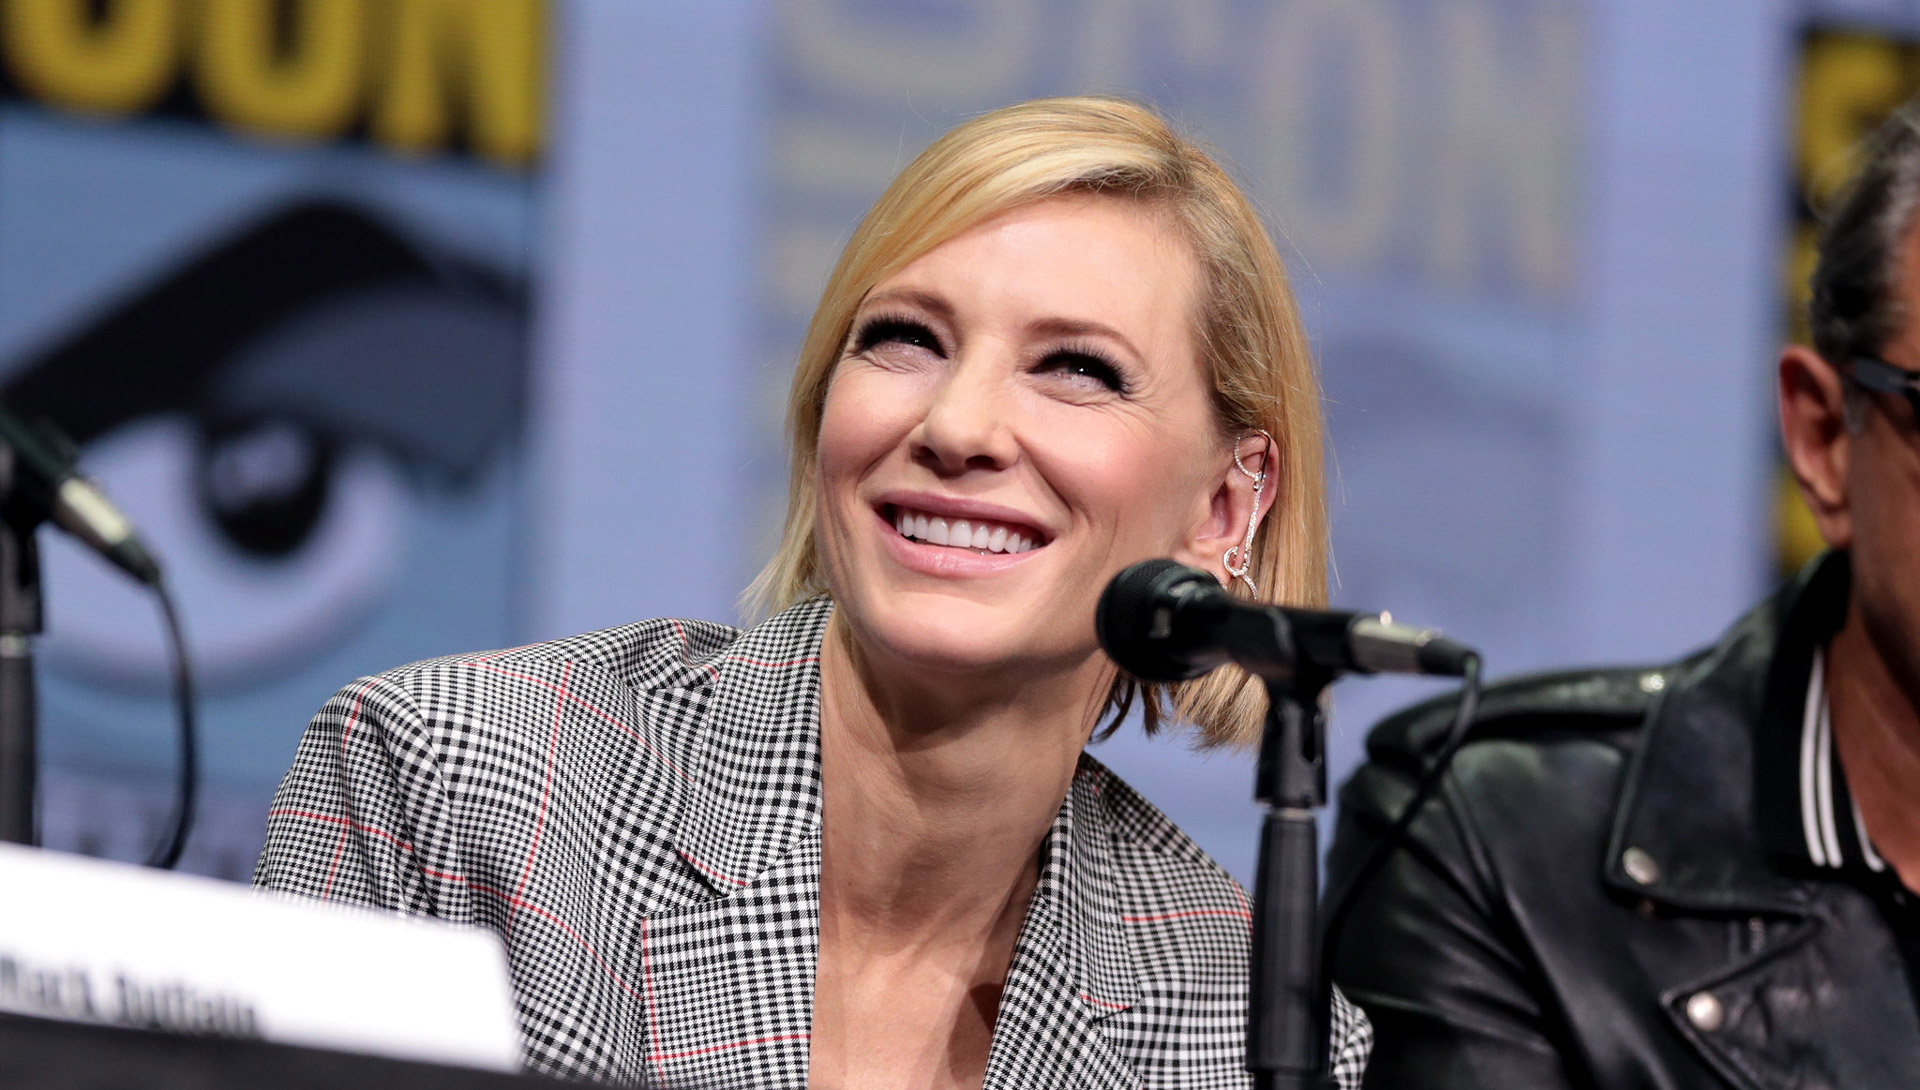 Cate Blanchett, en 2017, à l’International Comic Con de San Diego